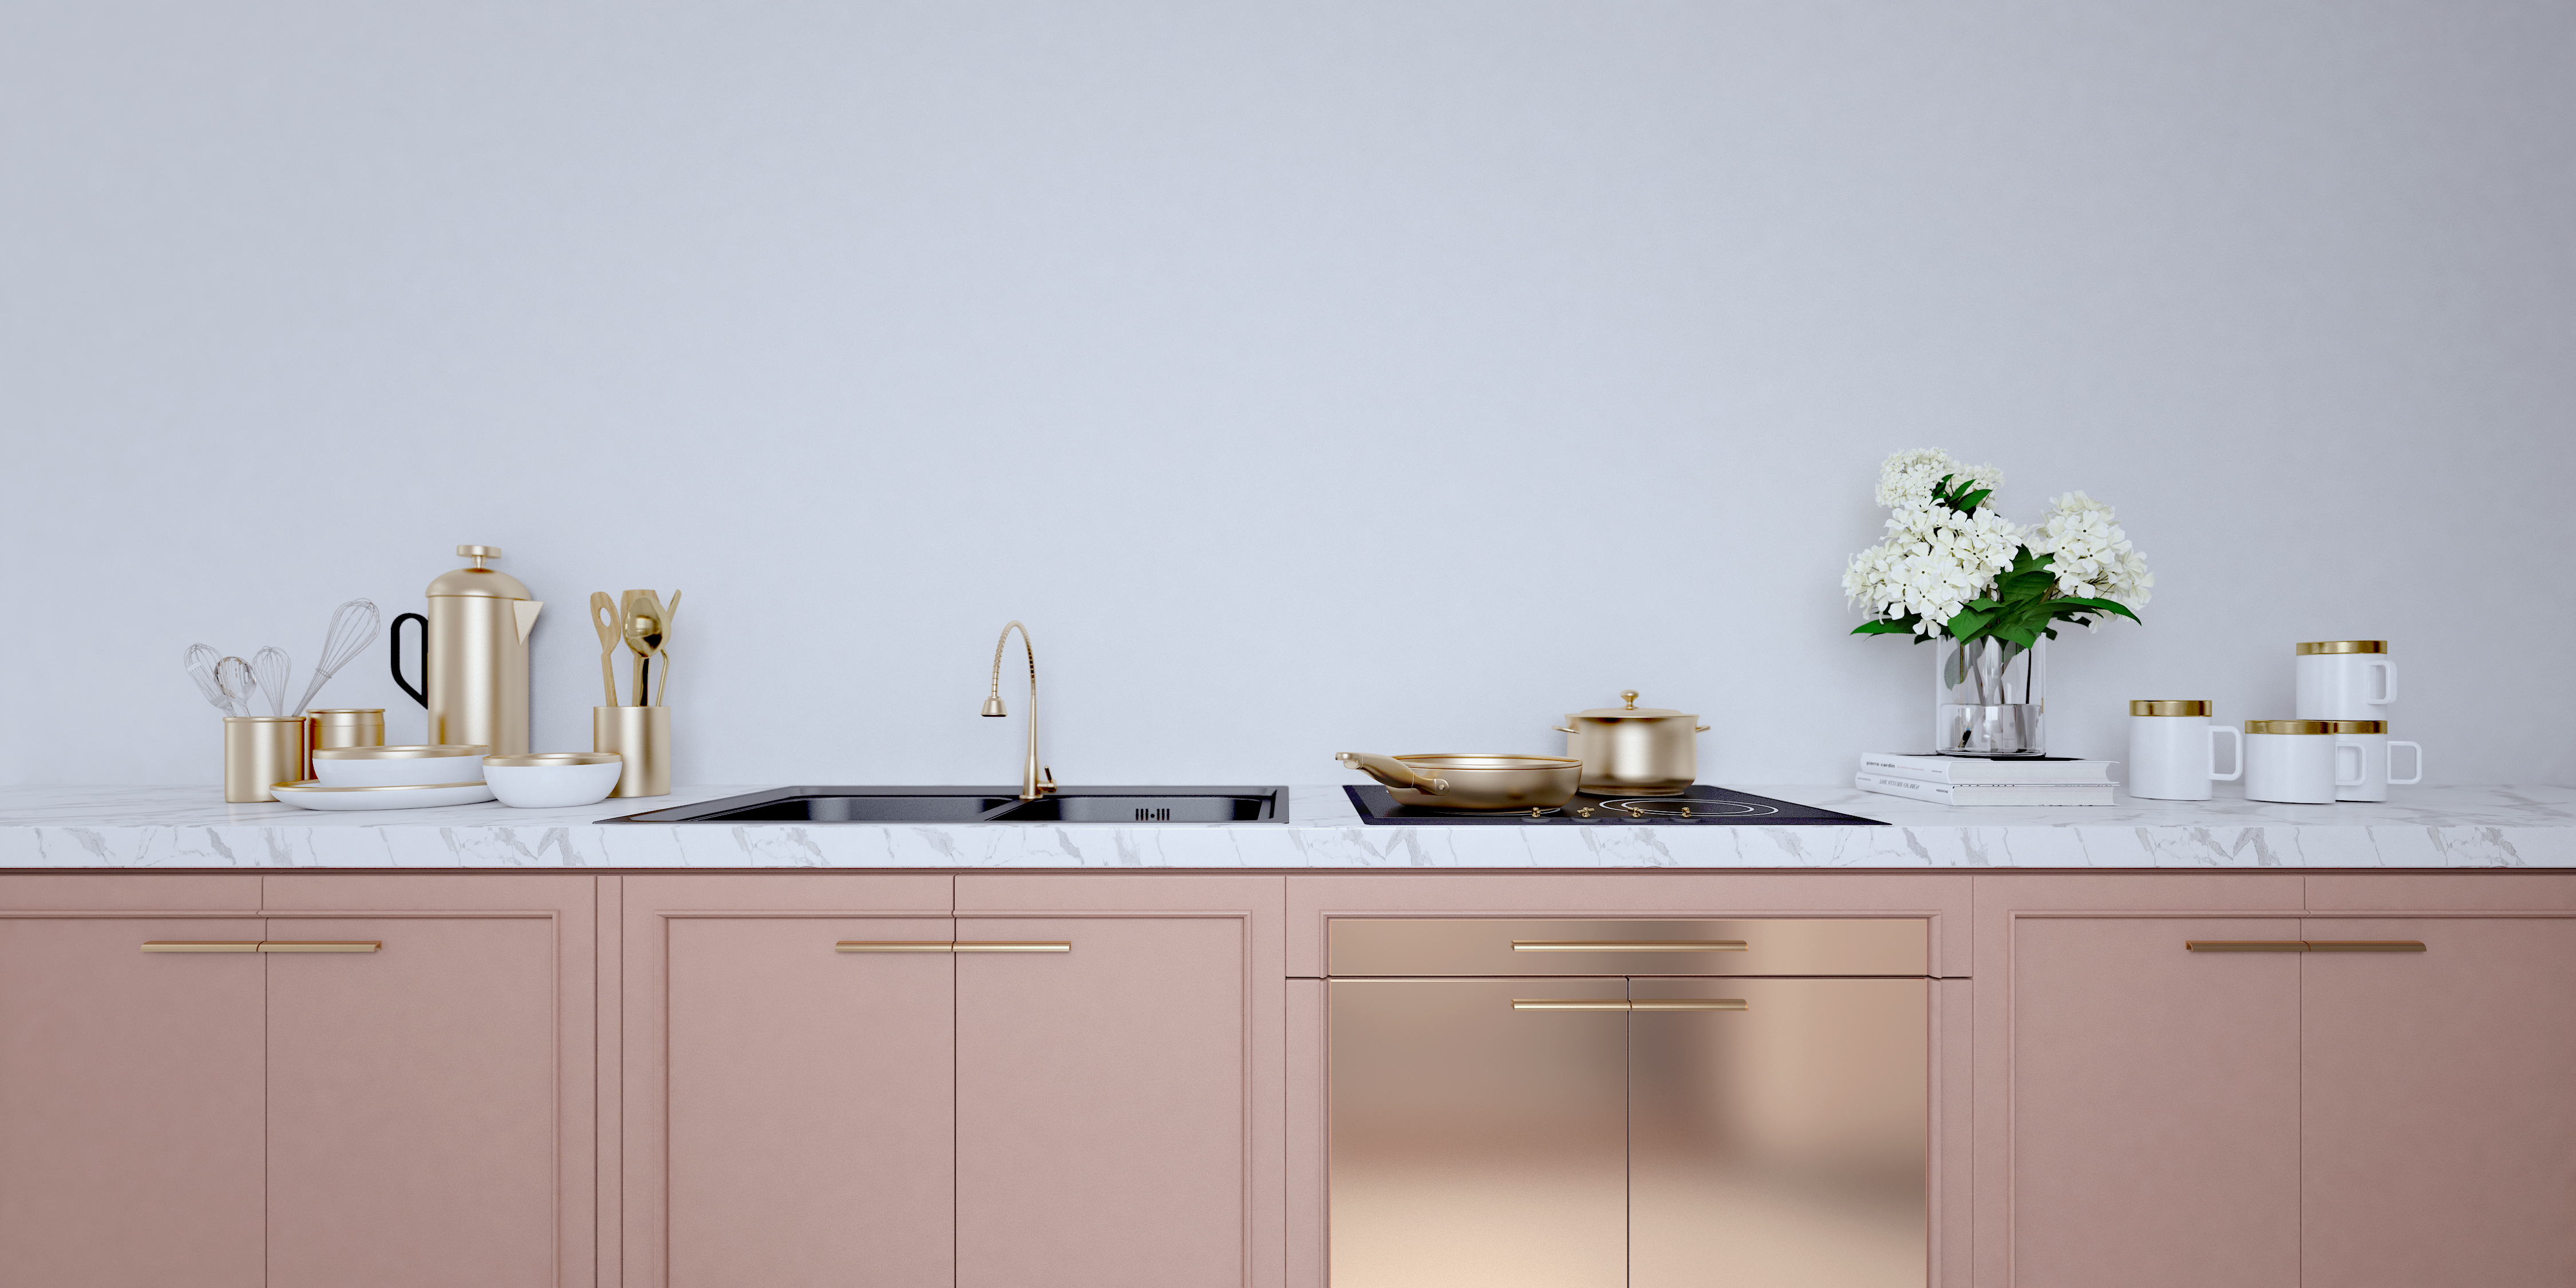 Rose gold kitchen cabinets